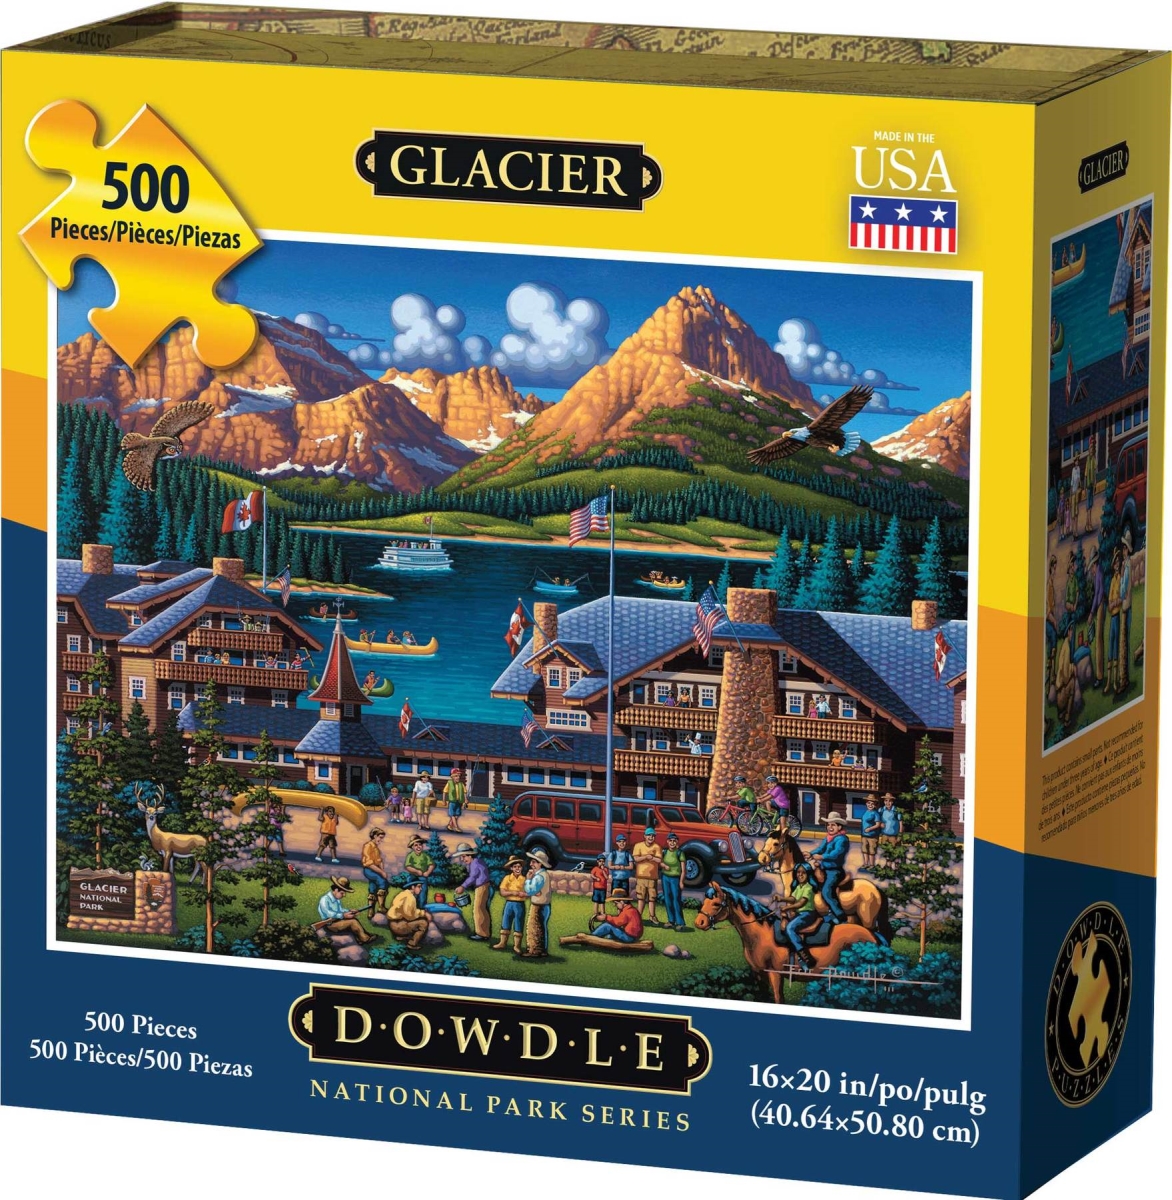 00335 16 X 20 In. Glacier National Park Jigsaw Puzzle - 500 Piece